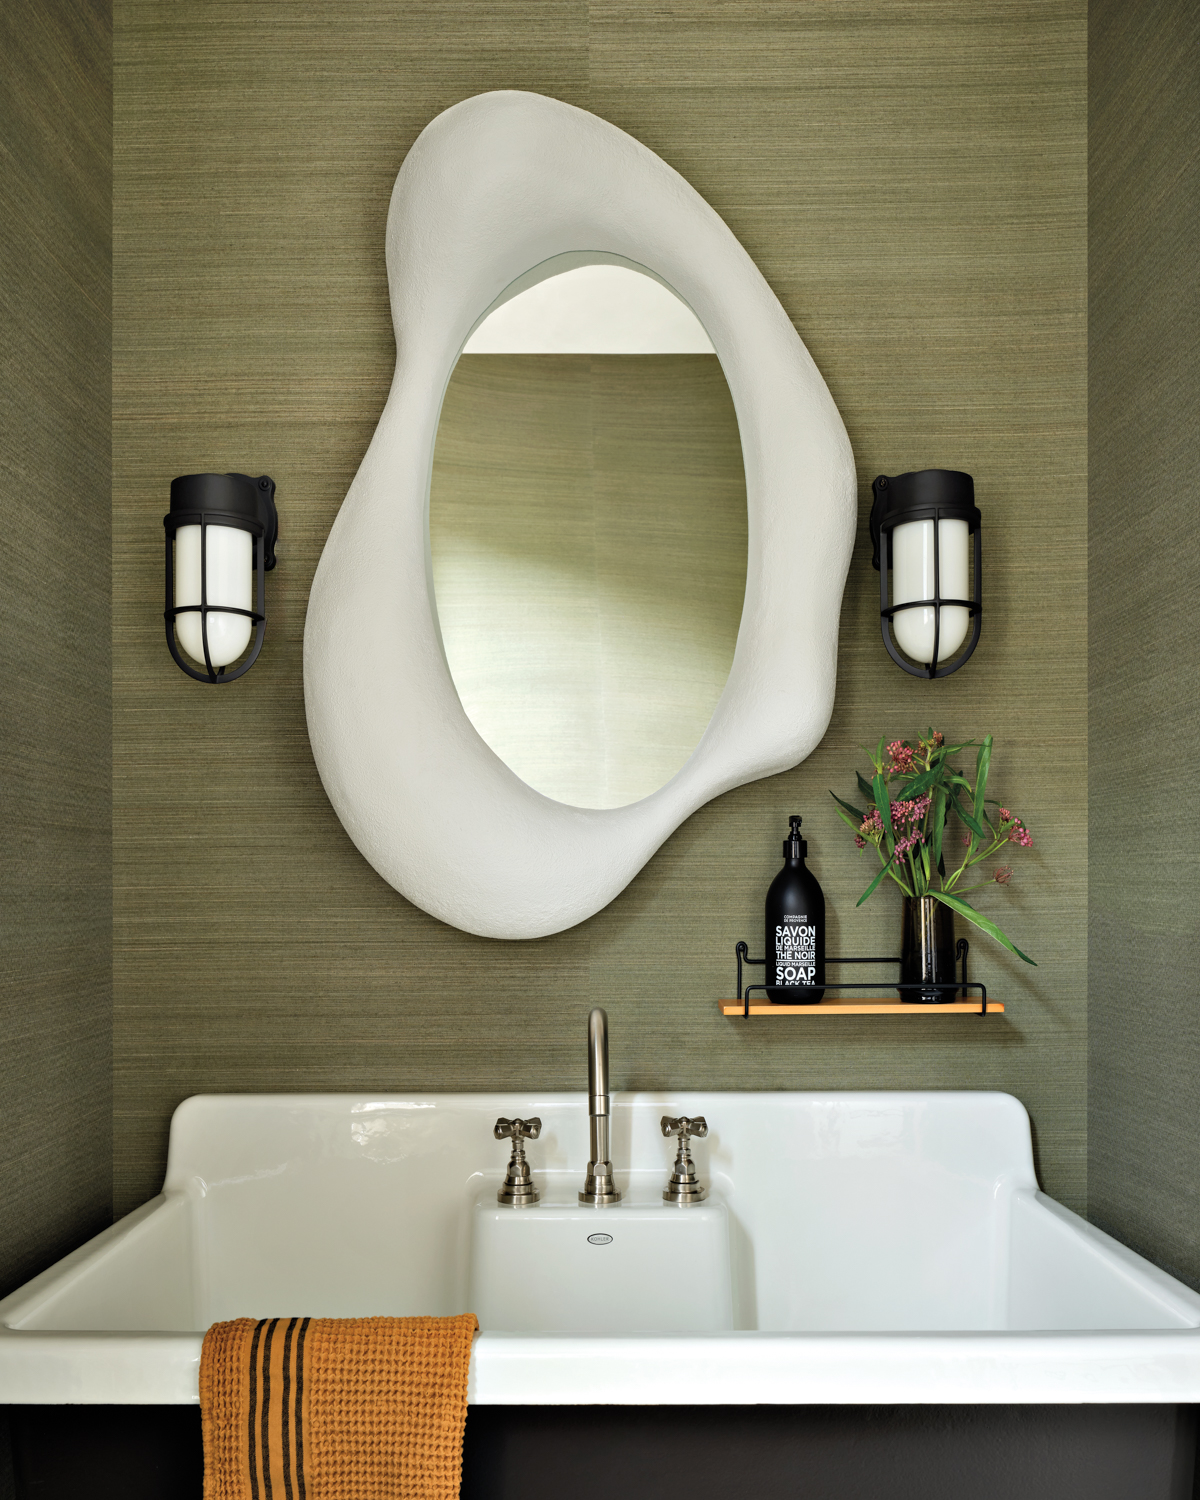 Bathroom designed by StudioAK with...